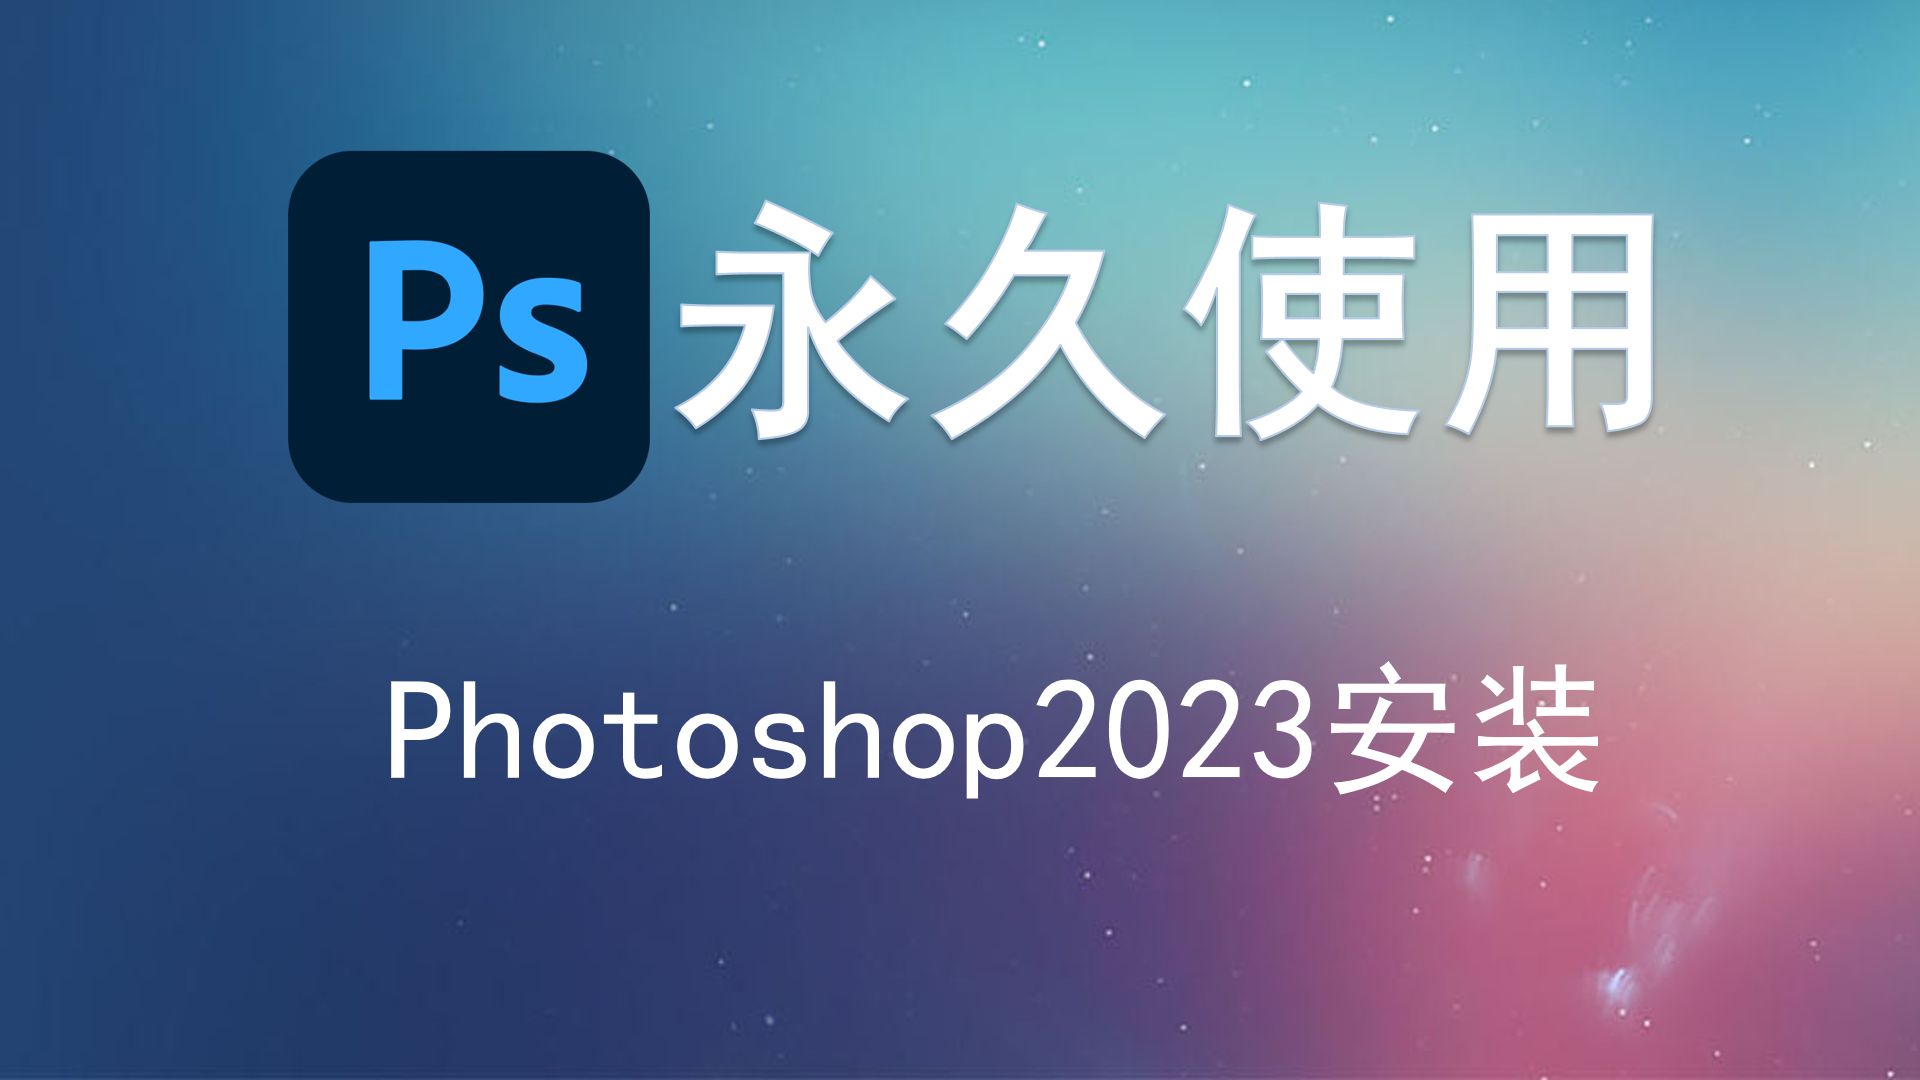 photoshop2023下载安装包永久使用!电脑图片摄影像平面设计师软件!